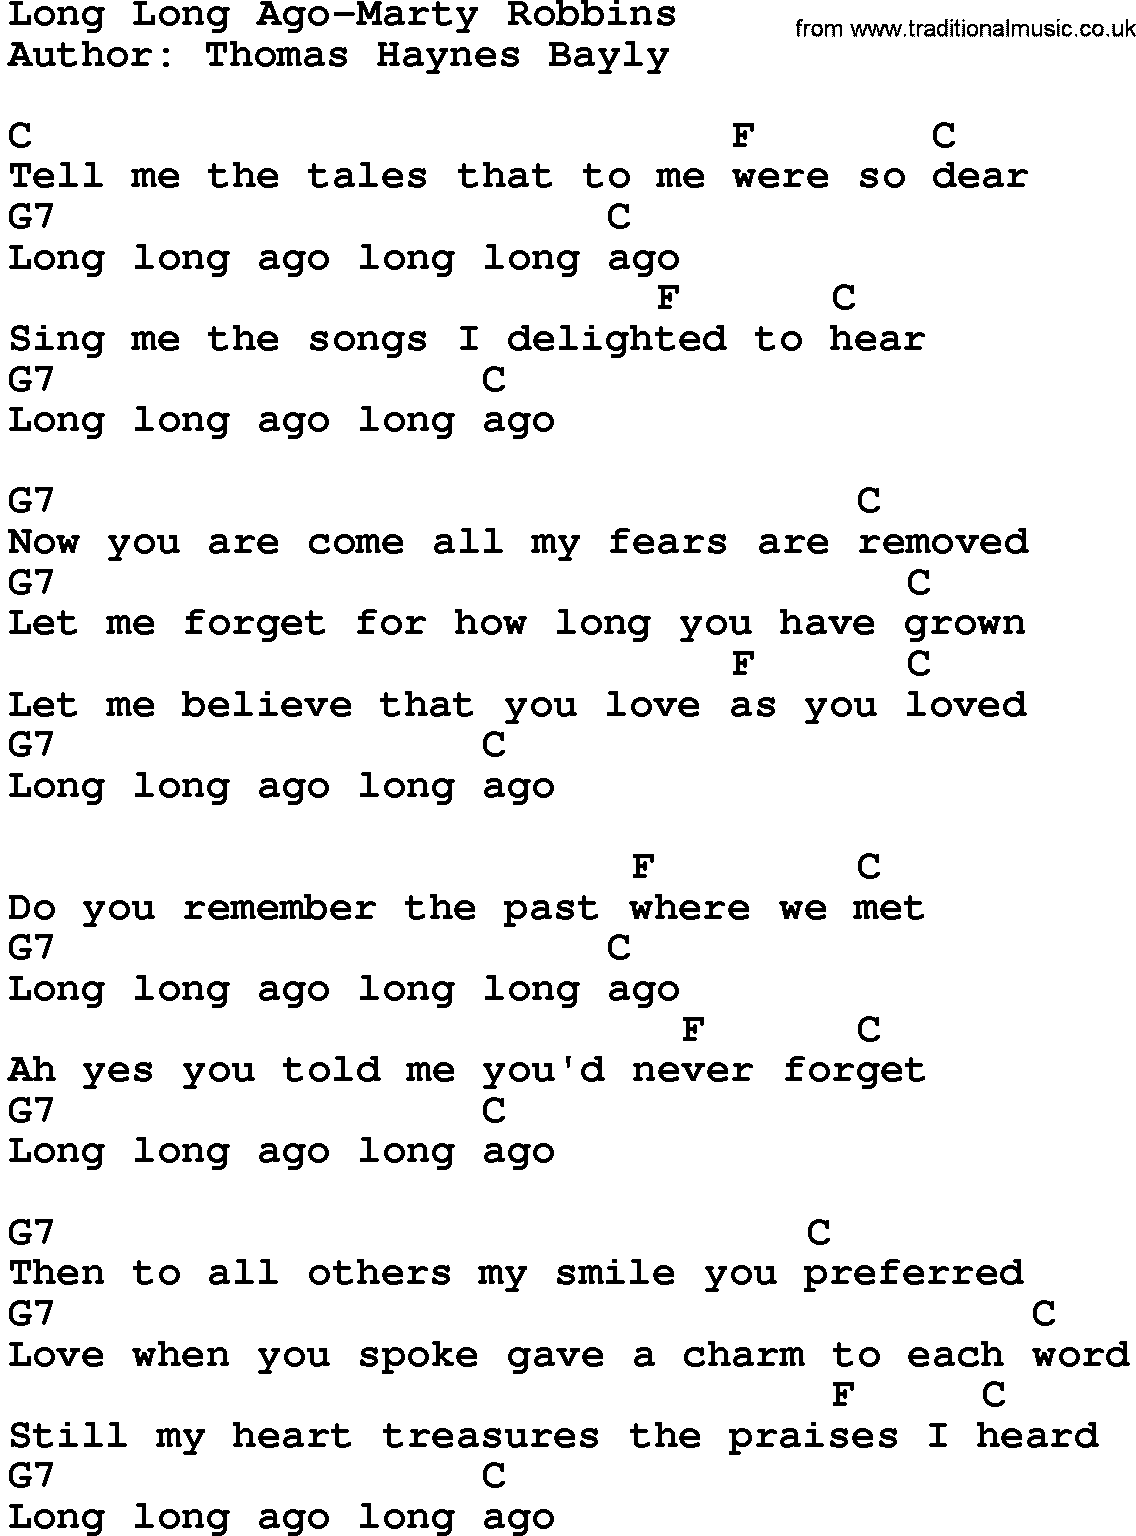 Country music song: Long Long Ago-Marty Robbins lyrics and chords